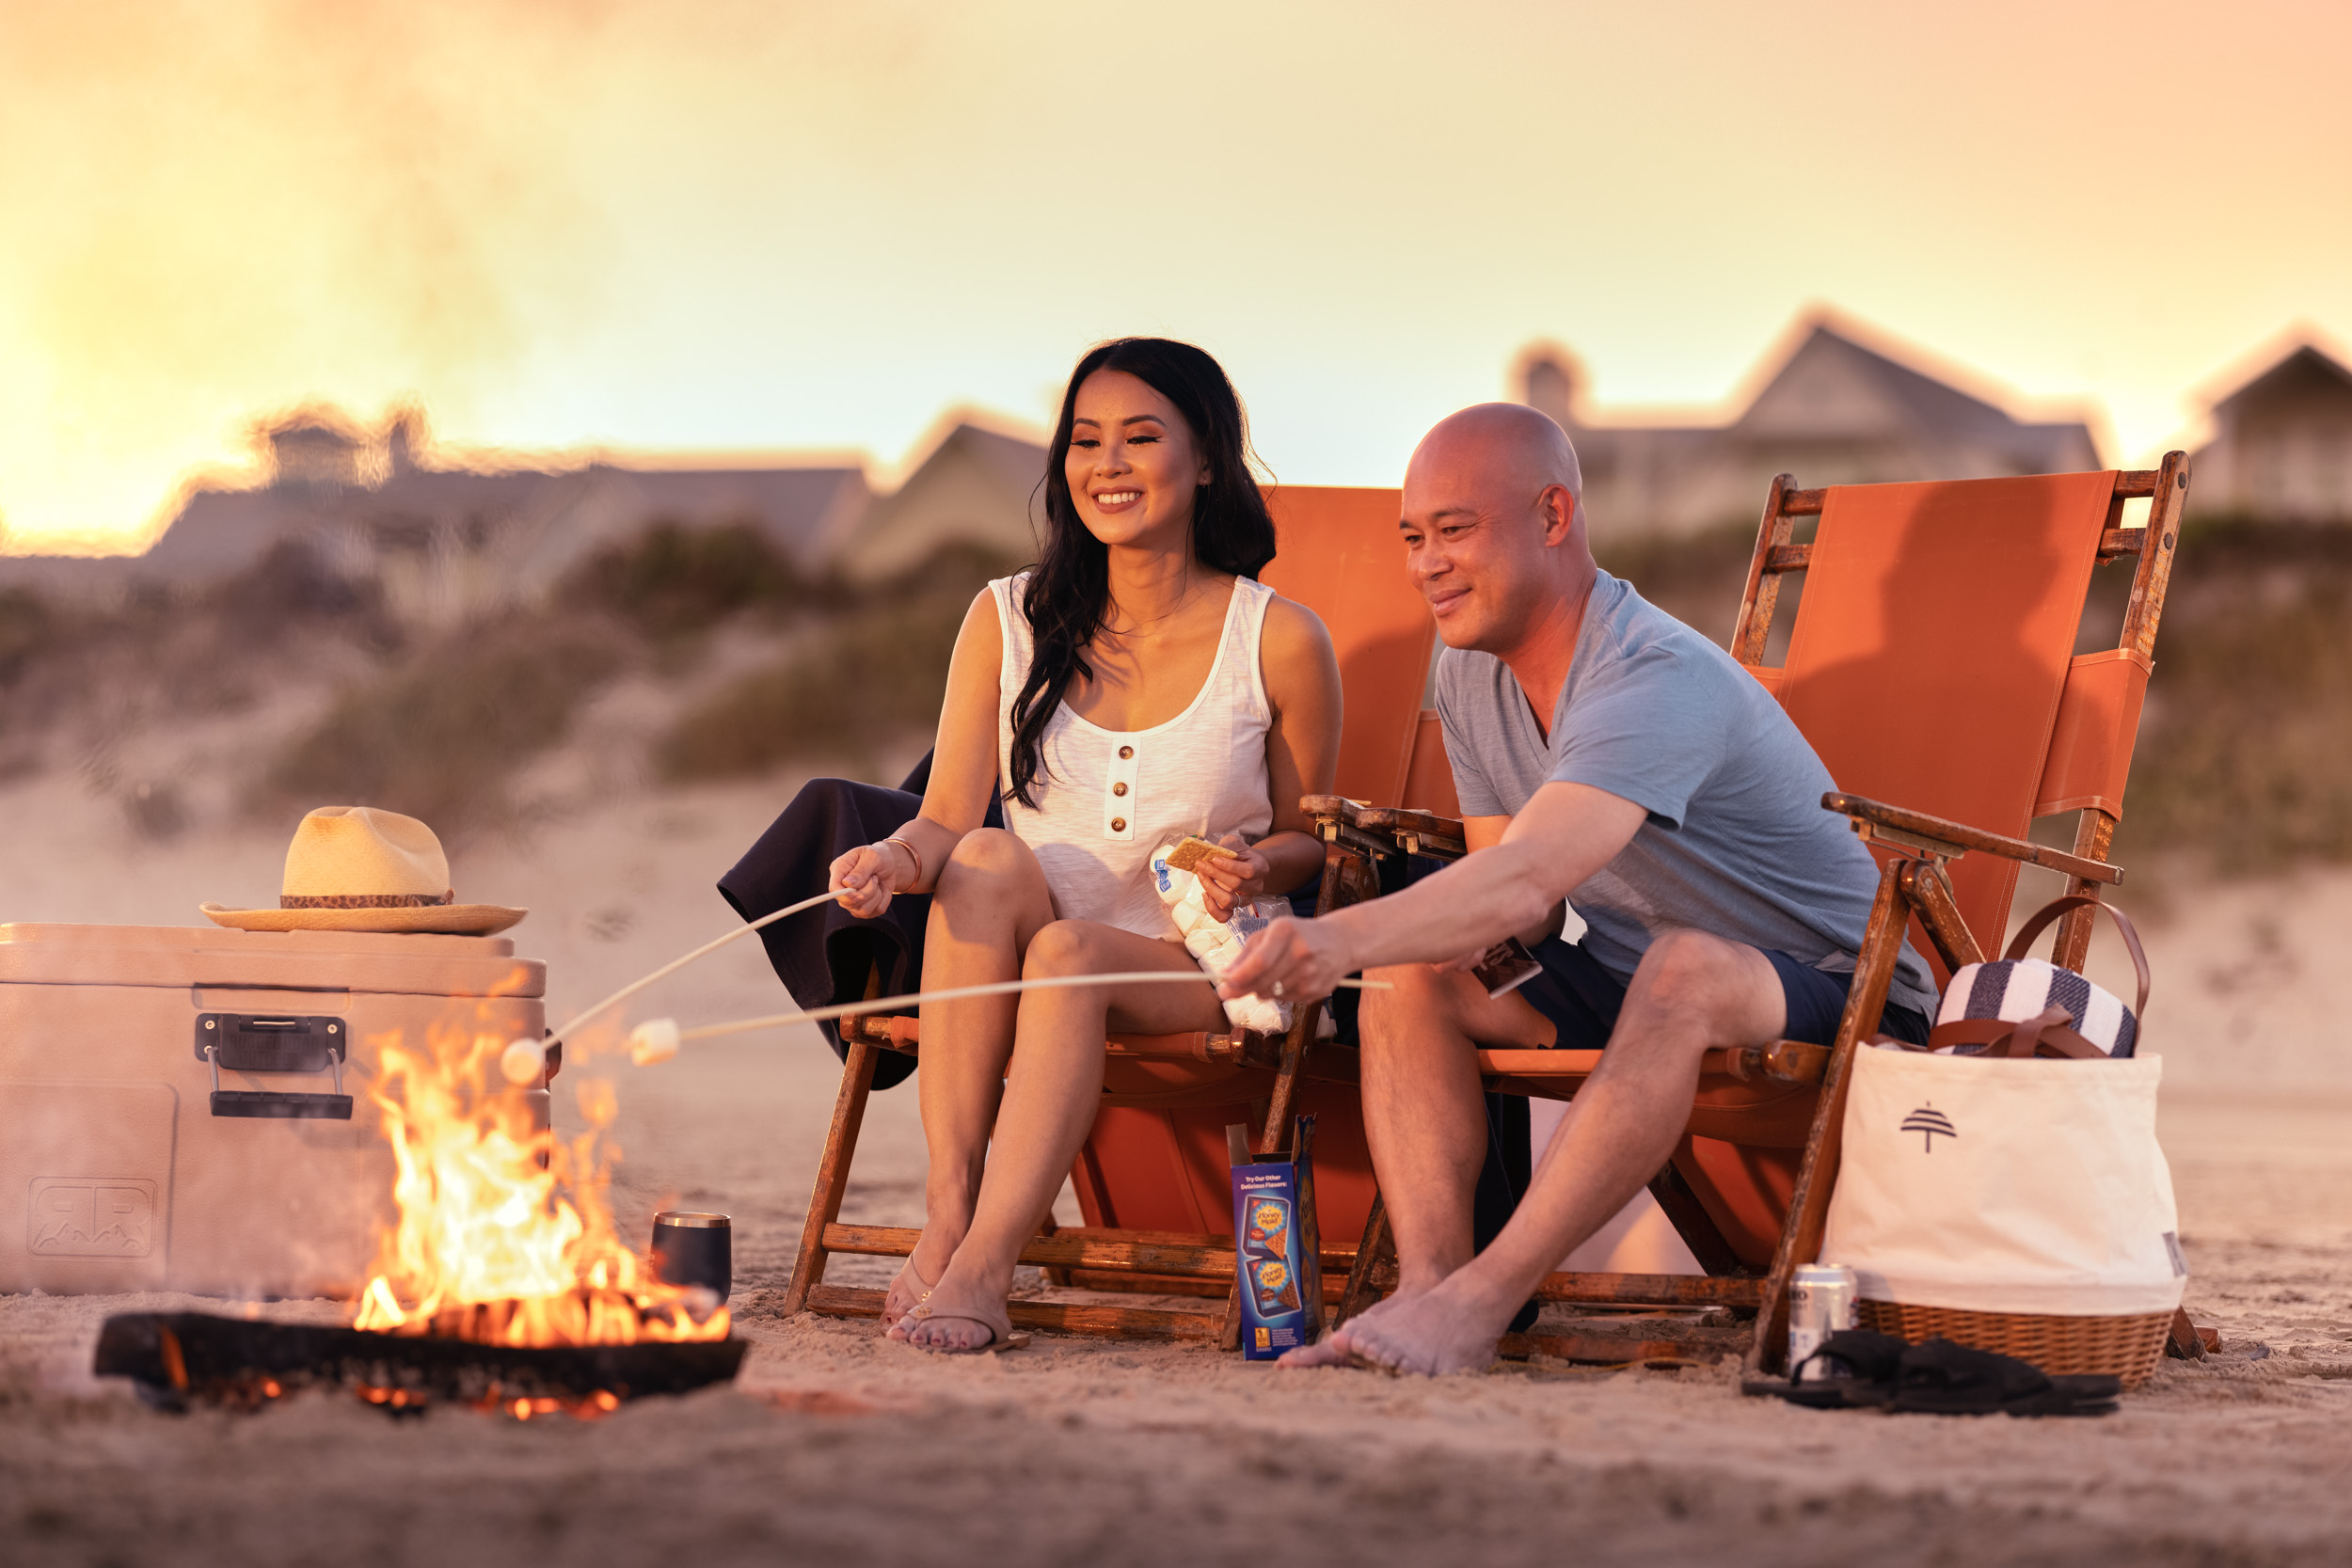 woman and man roasting marshmallows at campfire on beach